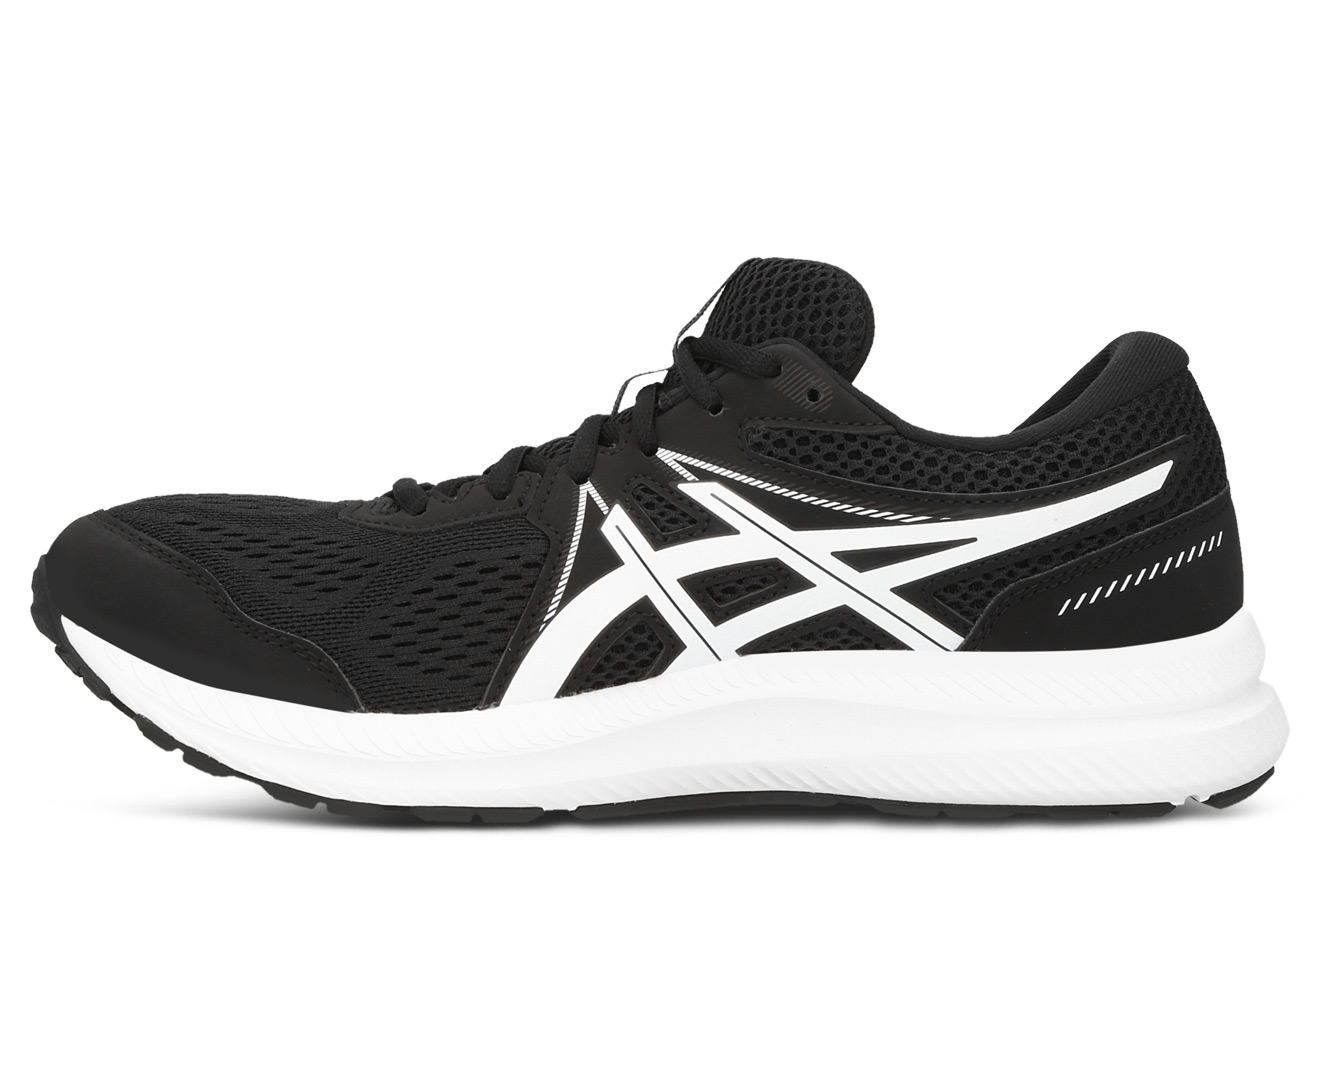 ASICS Men's GEL-Contend 7 Running Shoes - Black/White | Catch.co.nz